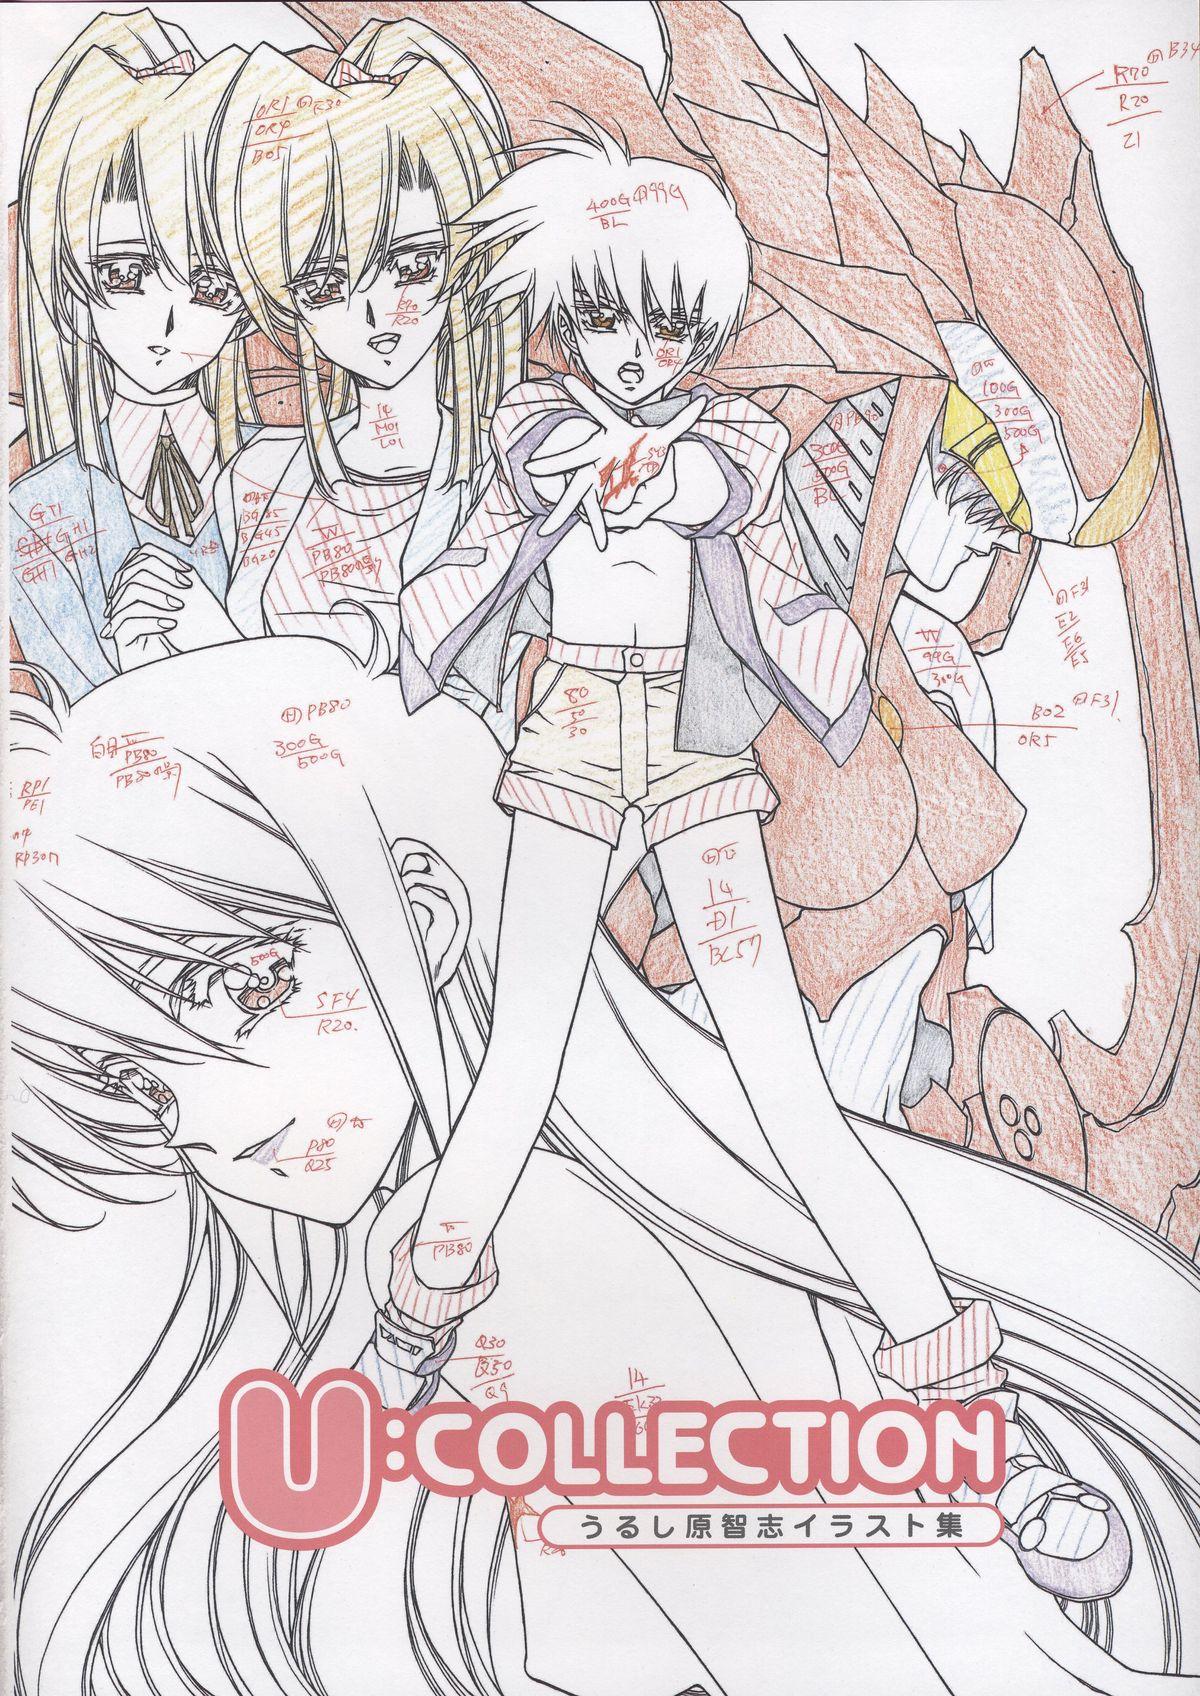 Urushihara Satoshi Illustrations U:COLLECTION 6